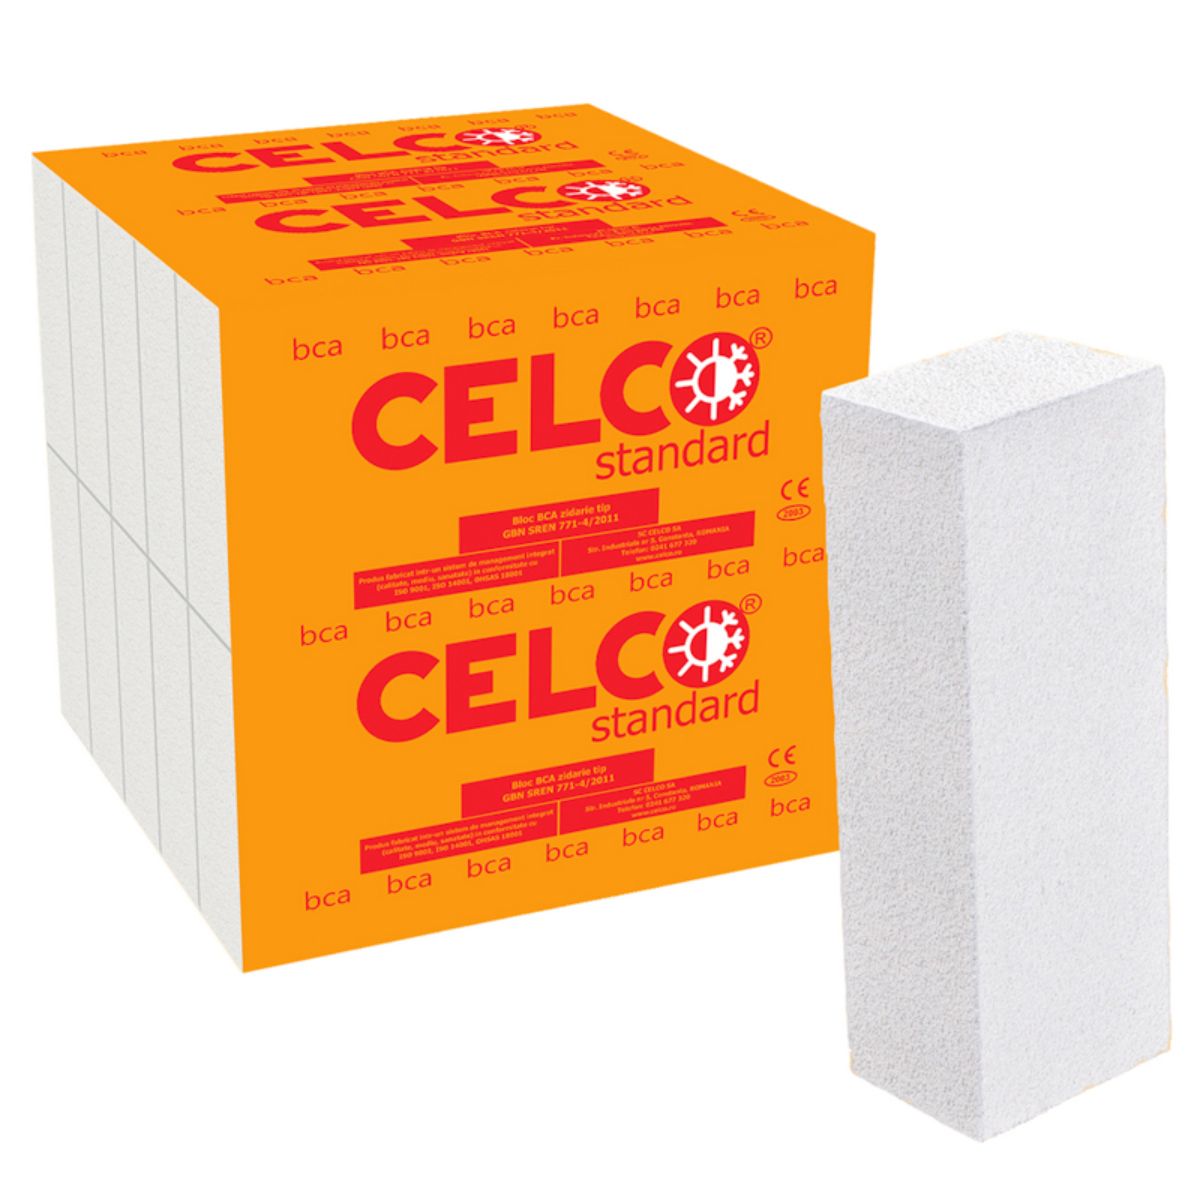 BCA Celco Standard 625/1 25/240